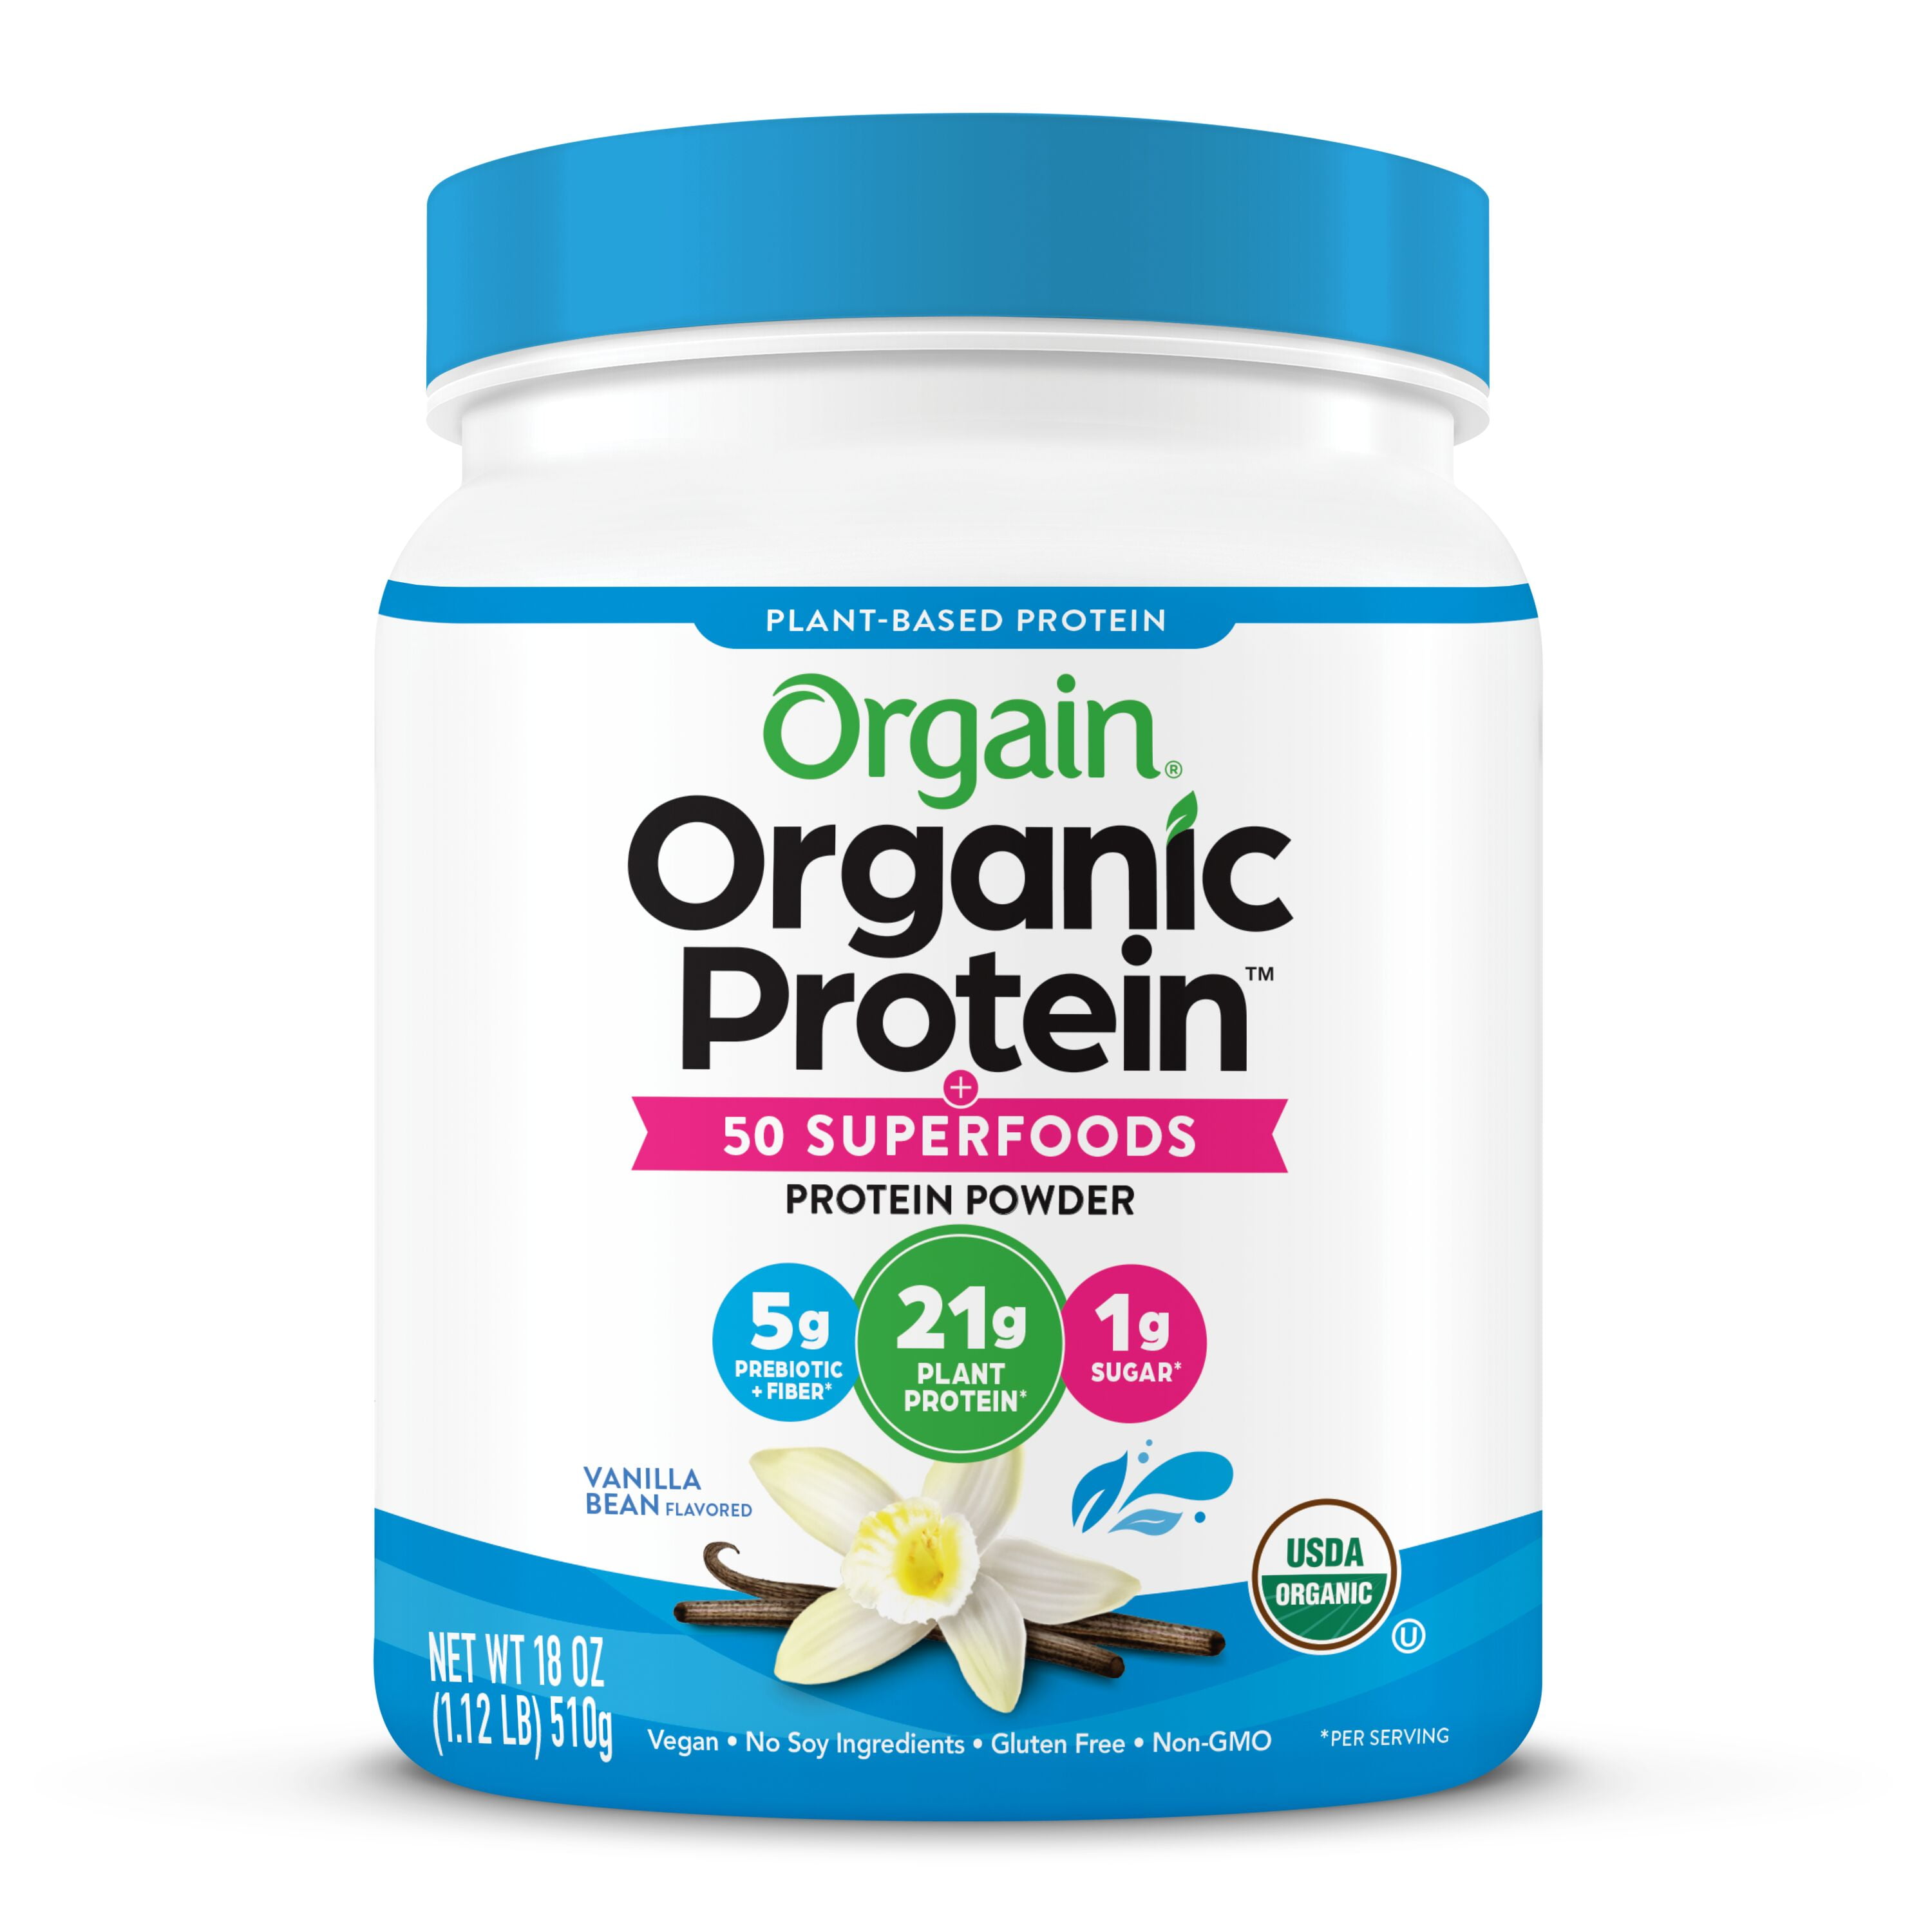 Orgain Organic Plant Based Protein + Superfoods Powder, Vanilla Bean, 21g Protein, 1.12 lb